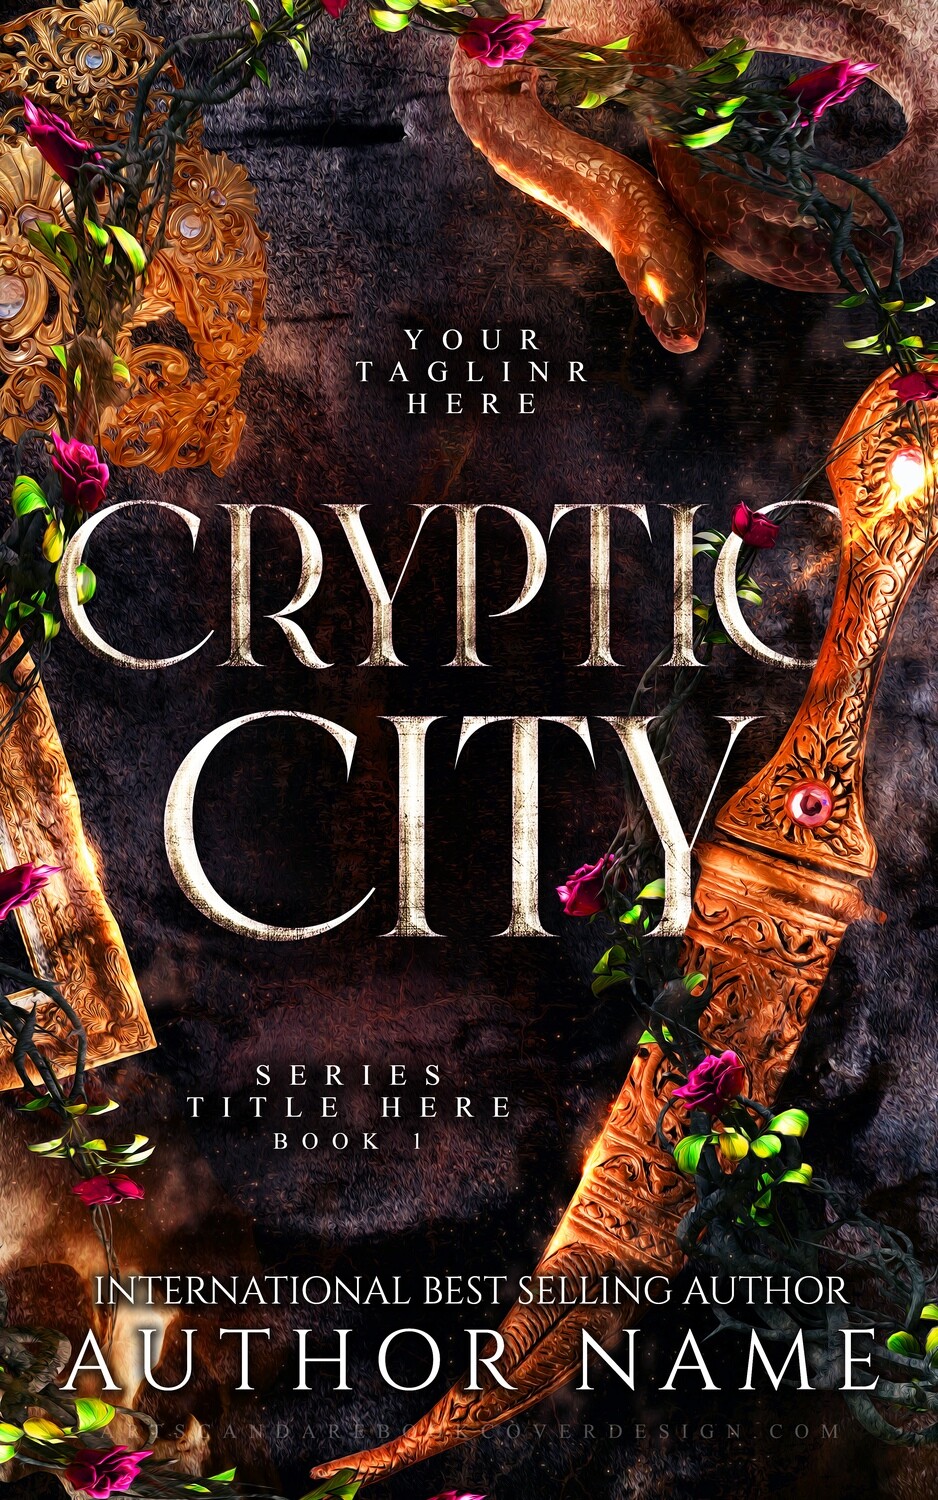 CRYPTIC CITY